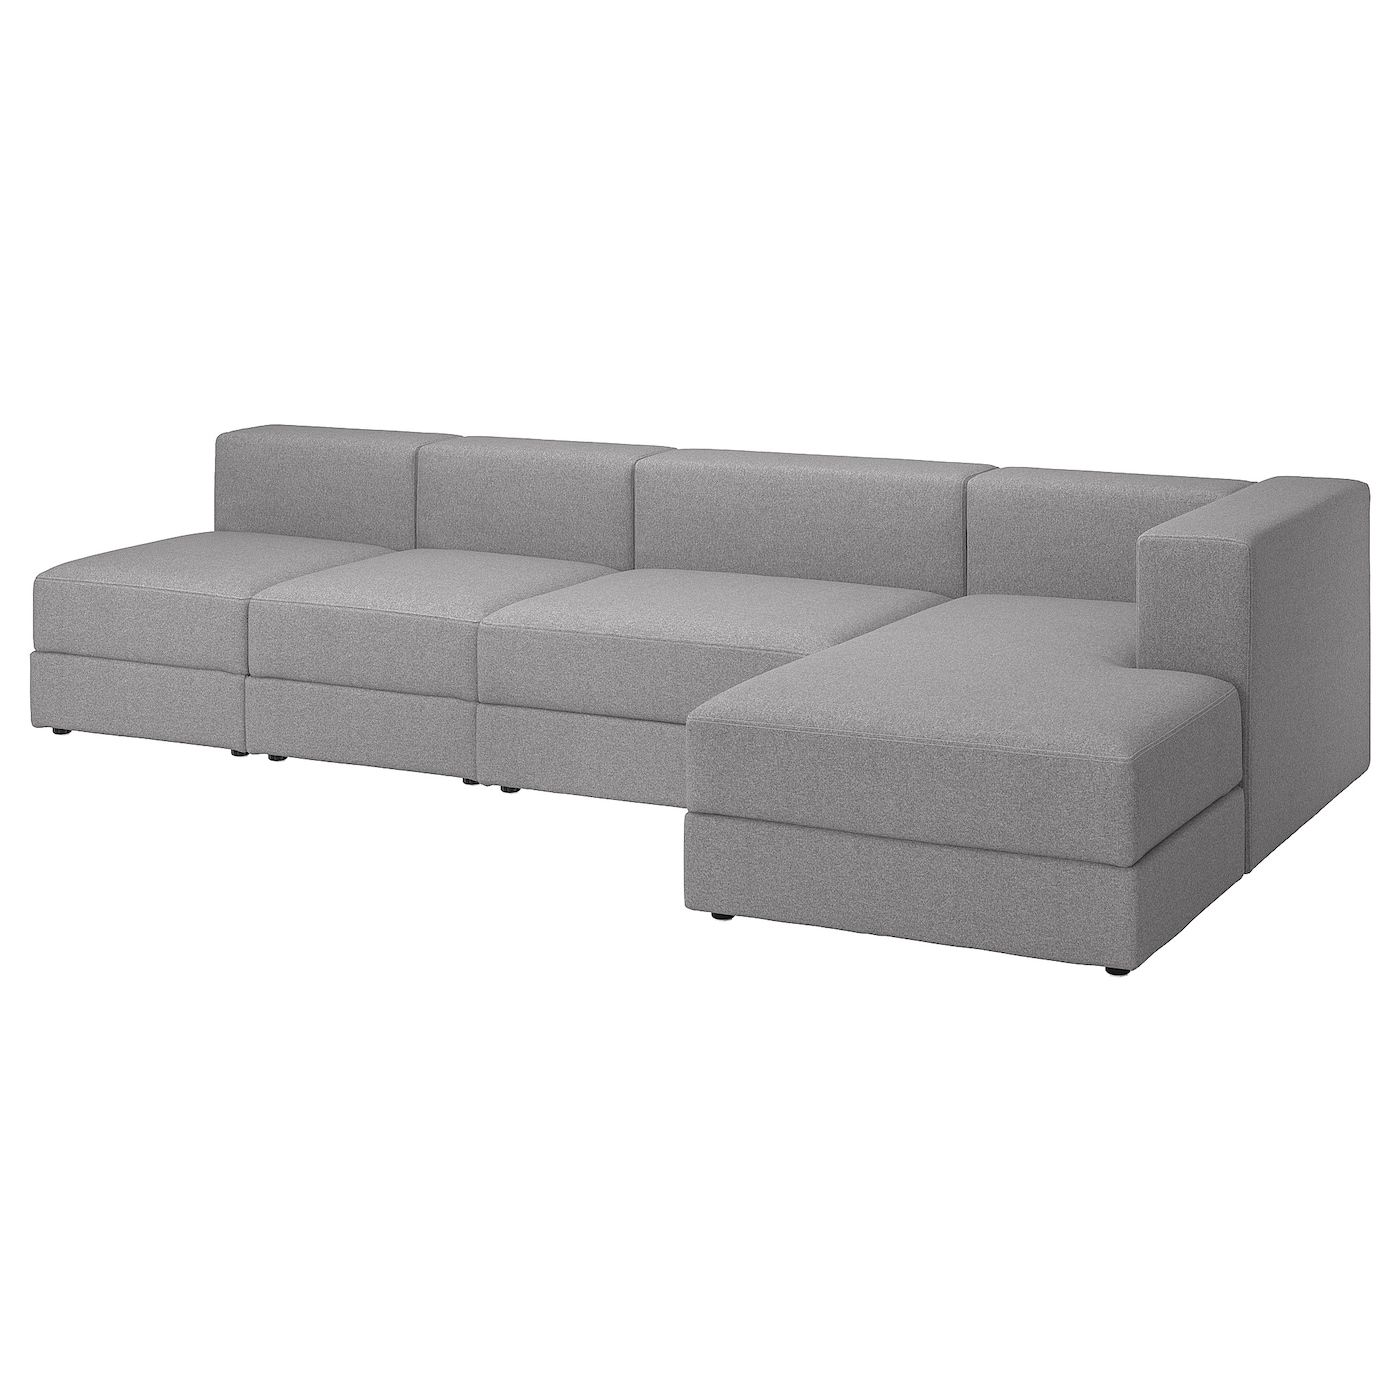 ДЖЭТТЕБО 5-местный диван + диван, правый/Тонеруд серый JÄTTEBO IKEA